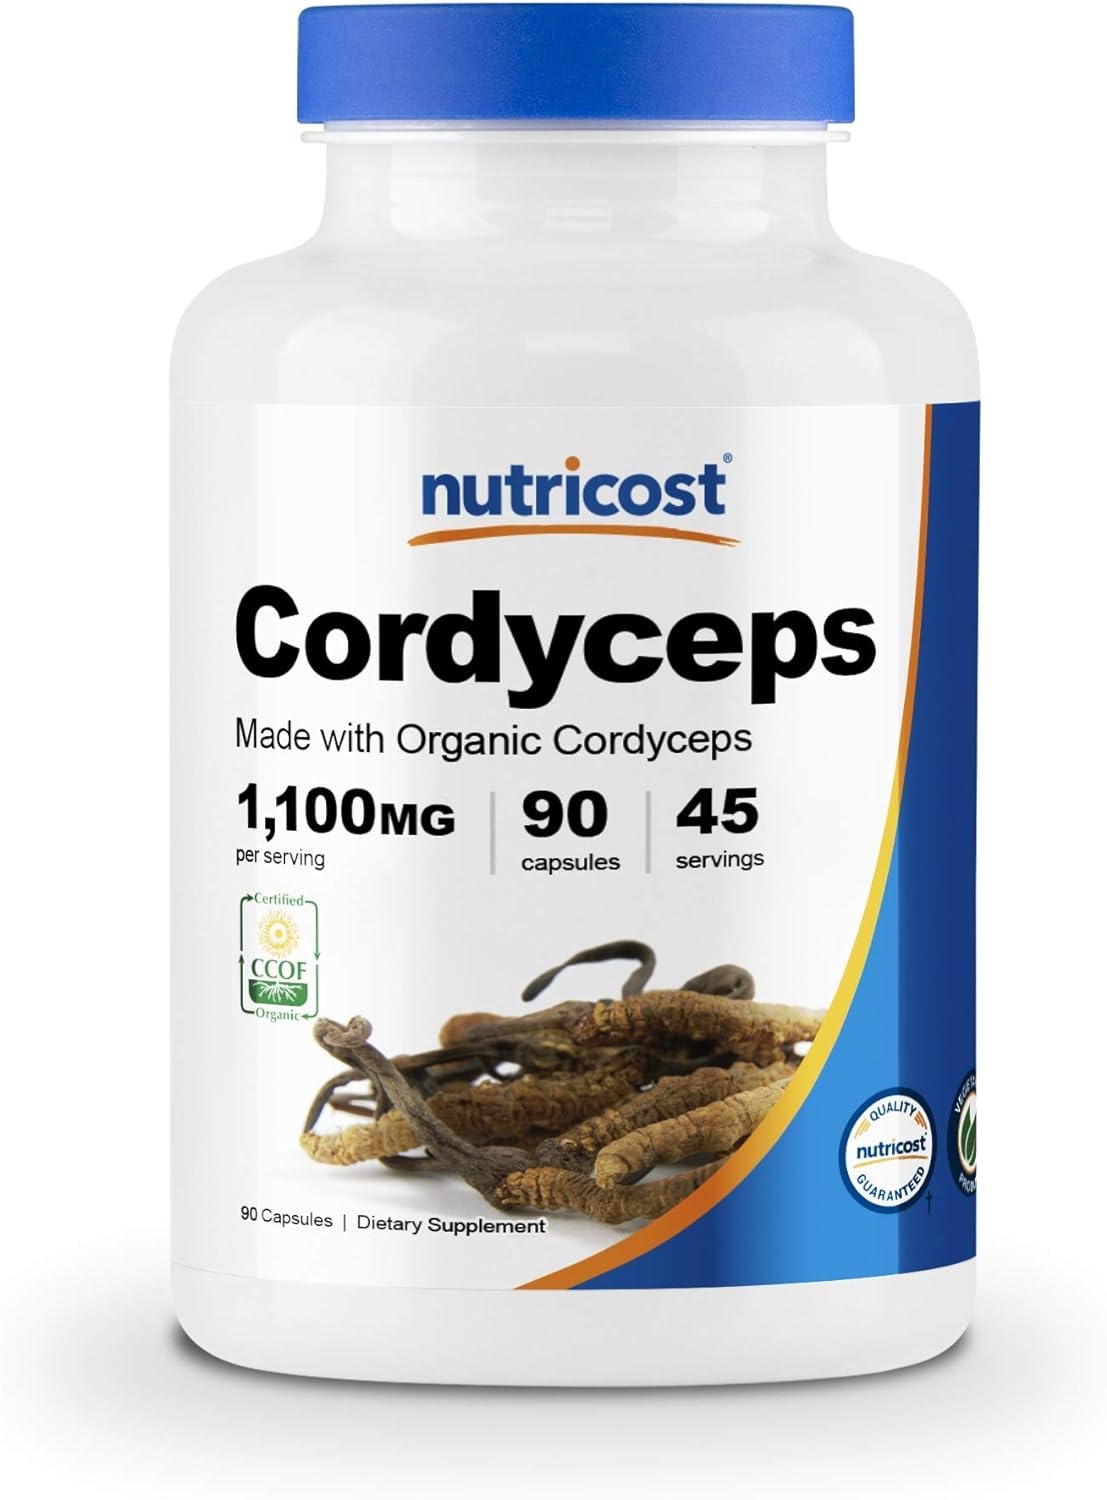 Nutricost Organic Cordyceps Mushroom Capsules 1100mg, 45 Serv - Certified CCOF Organic, Vegetarian, Gluten Free, 550mg Per Capsule (90 Capsules)